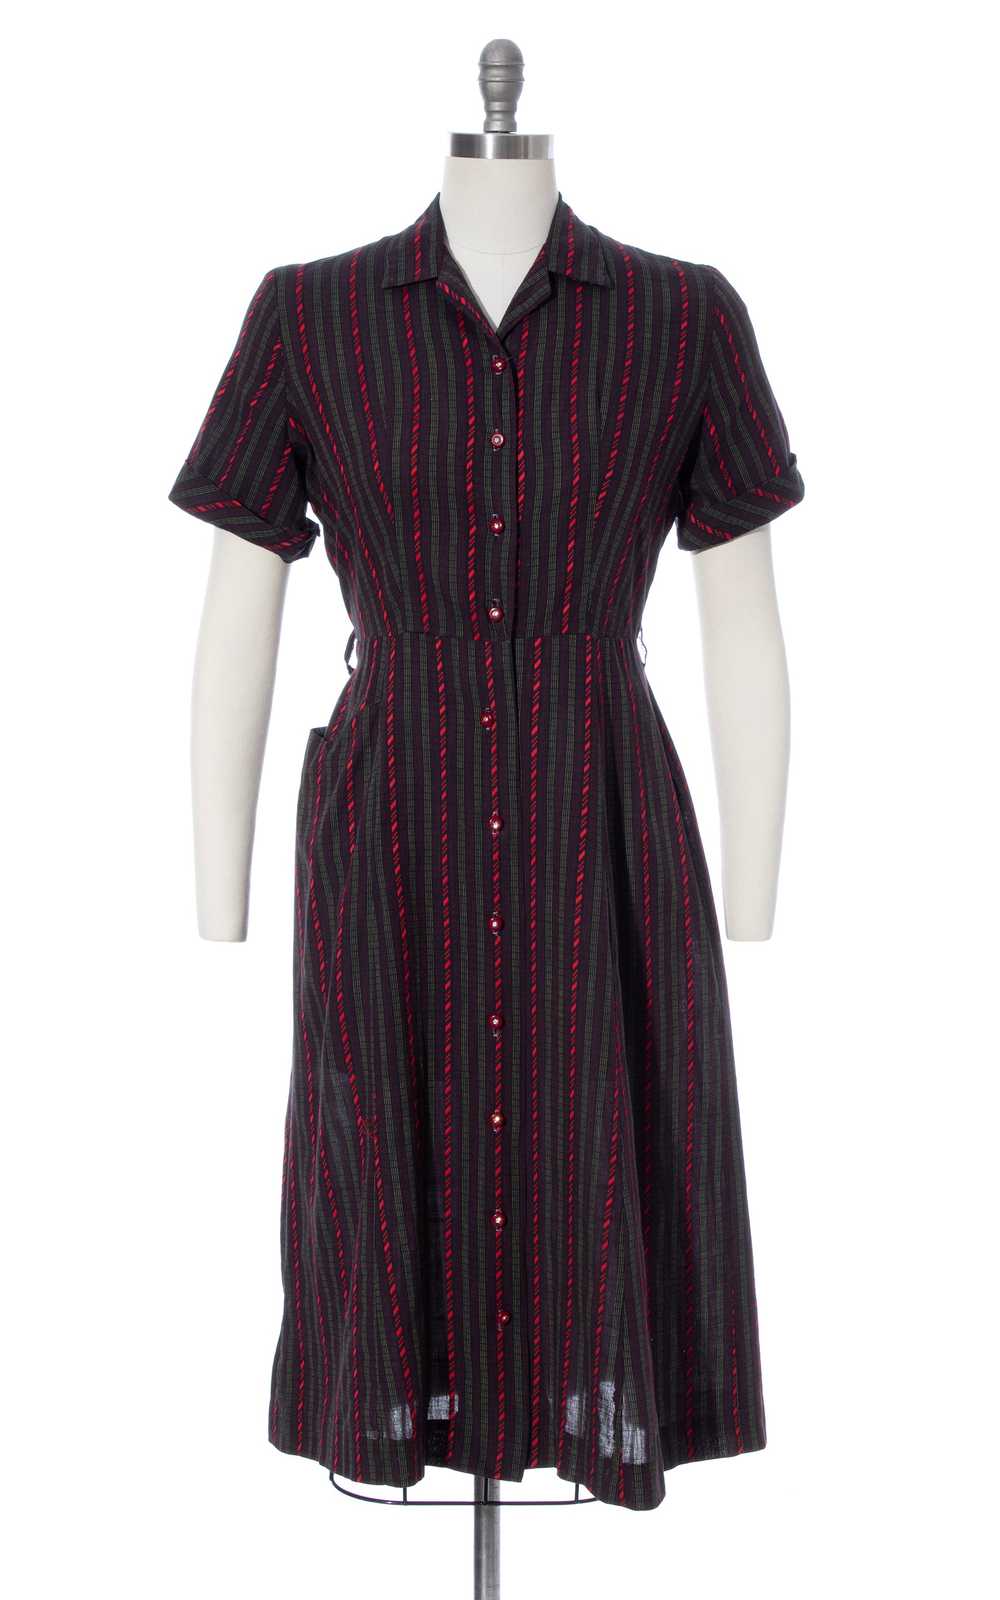 1950s Striped Cotton Shirtwaist Dress with Pocket… - image 1